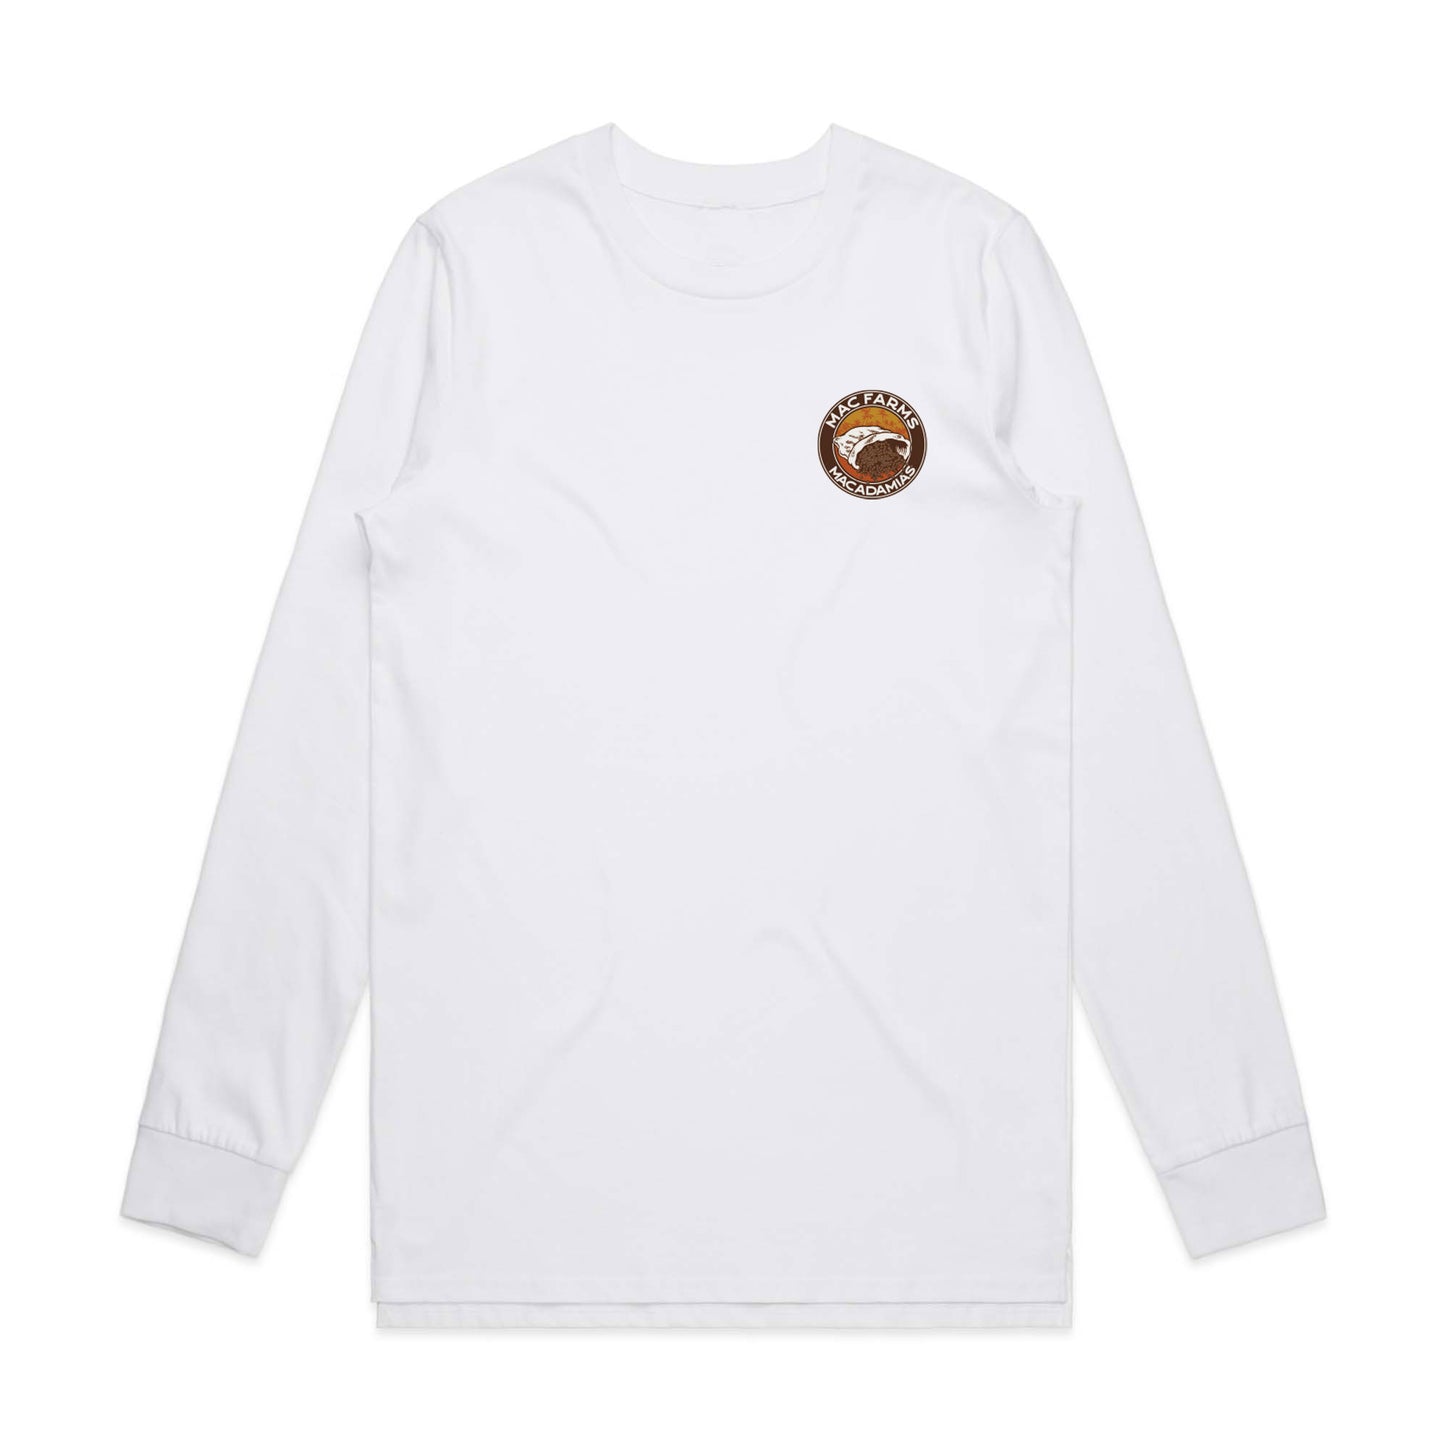 MacFarms white long sleeve t-shirt with burlap sack of macadamias design on pocket 